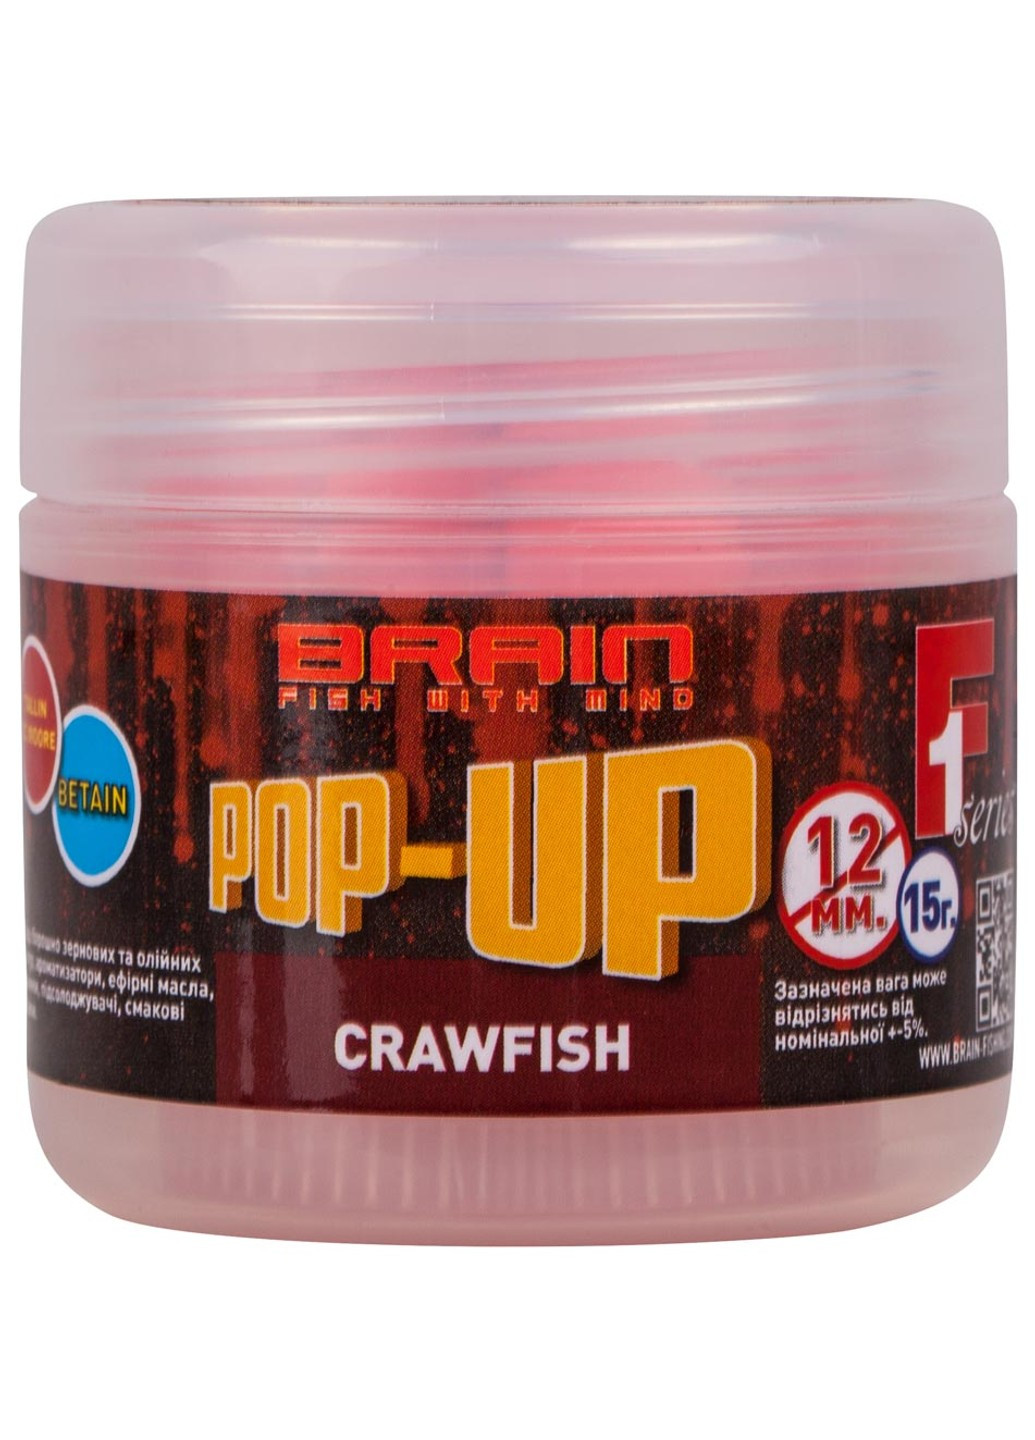 Бойли Pop-Up F1 Craw Fish (річковий рак) 12 мм 15 g Brain (252651484)